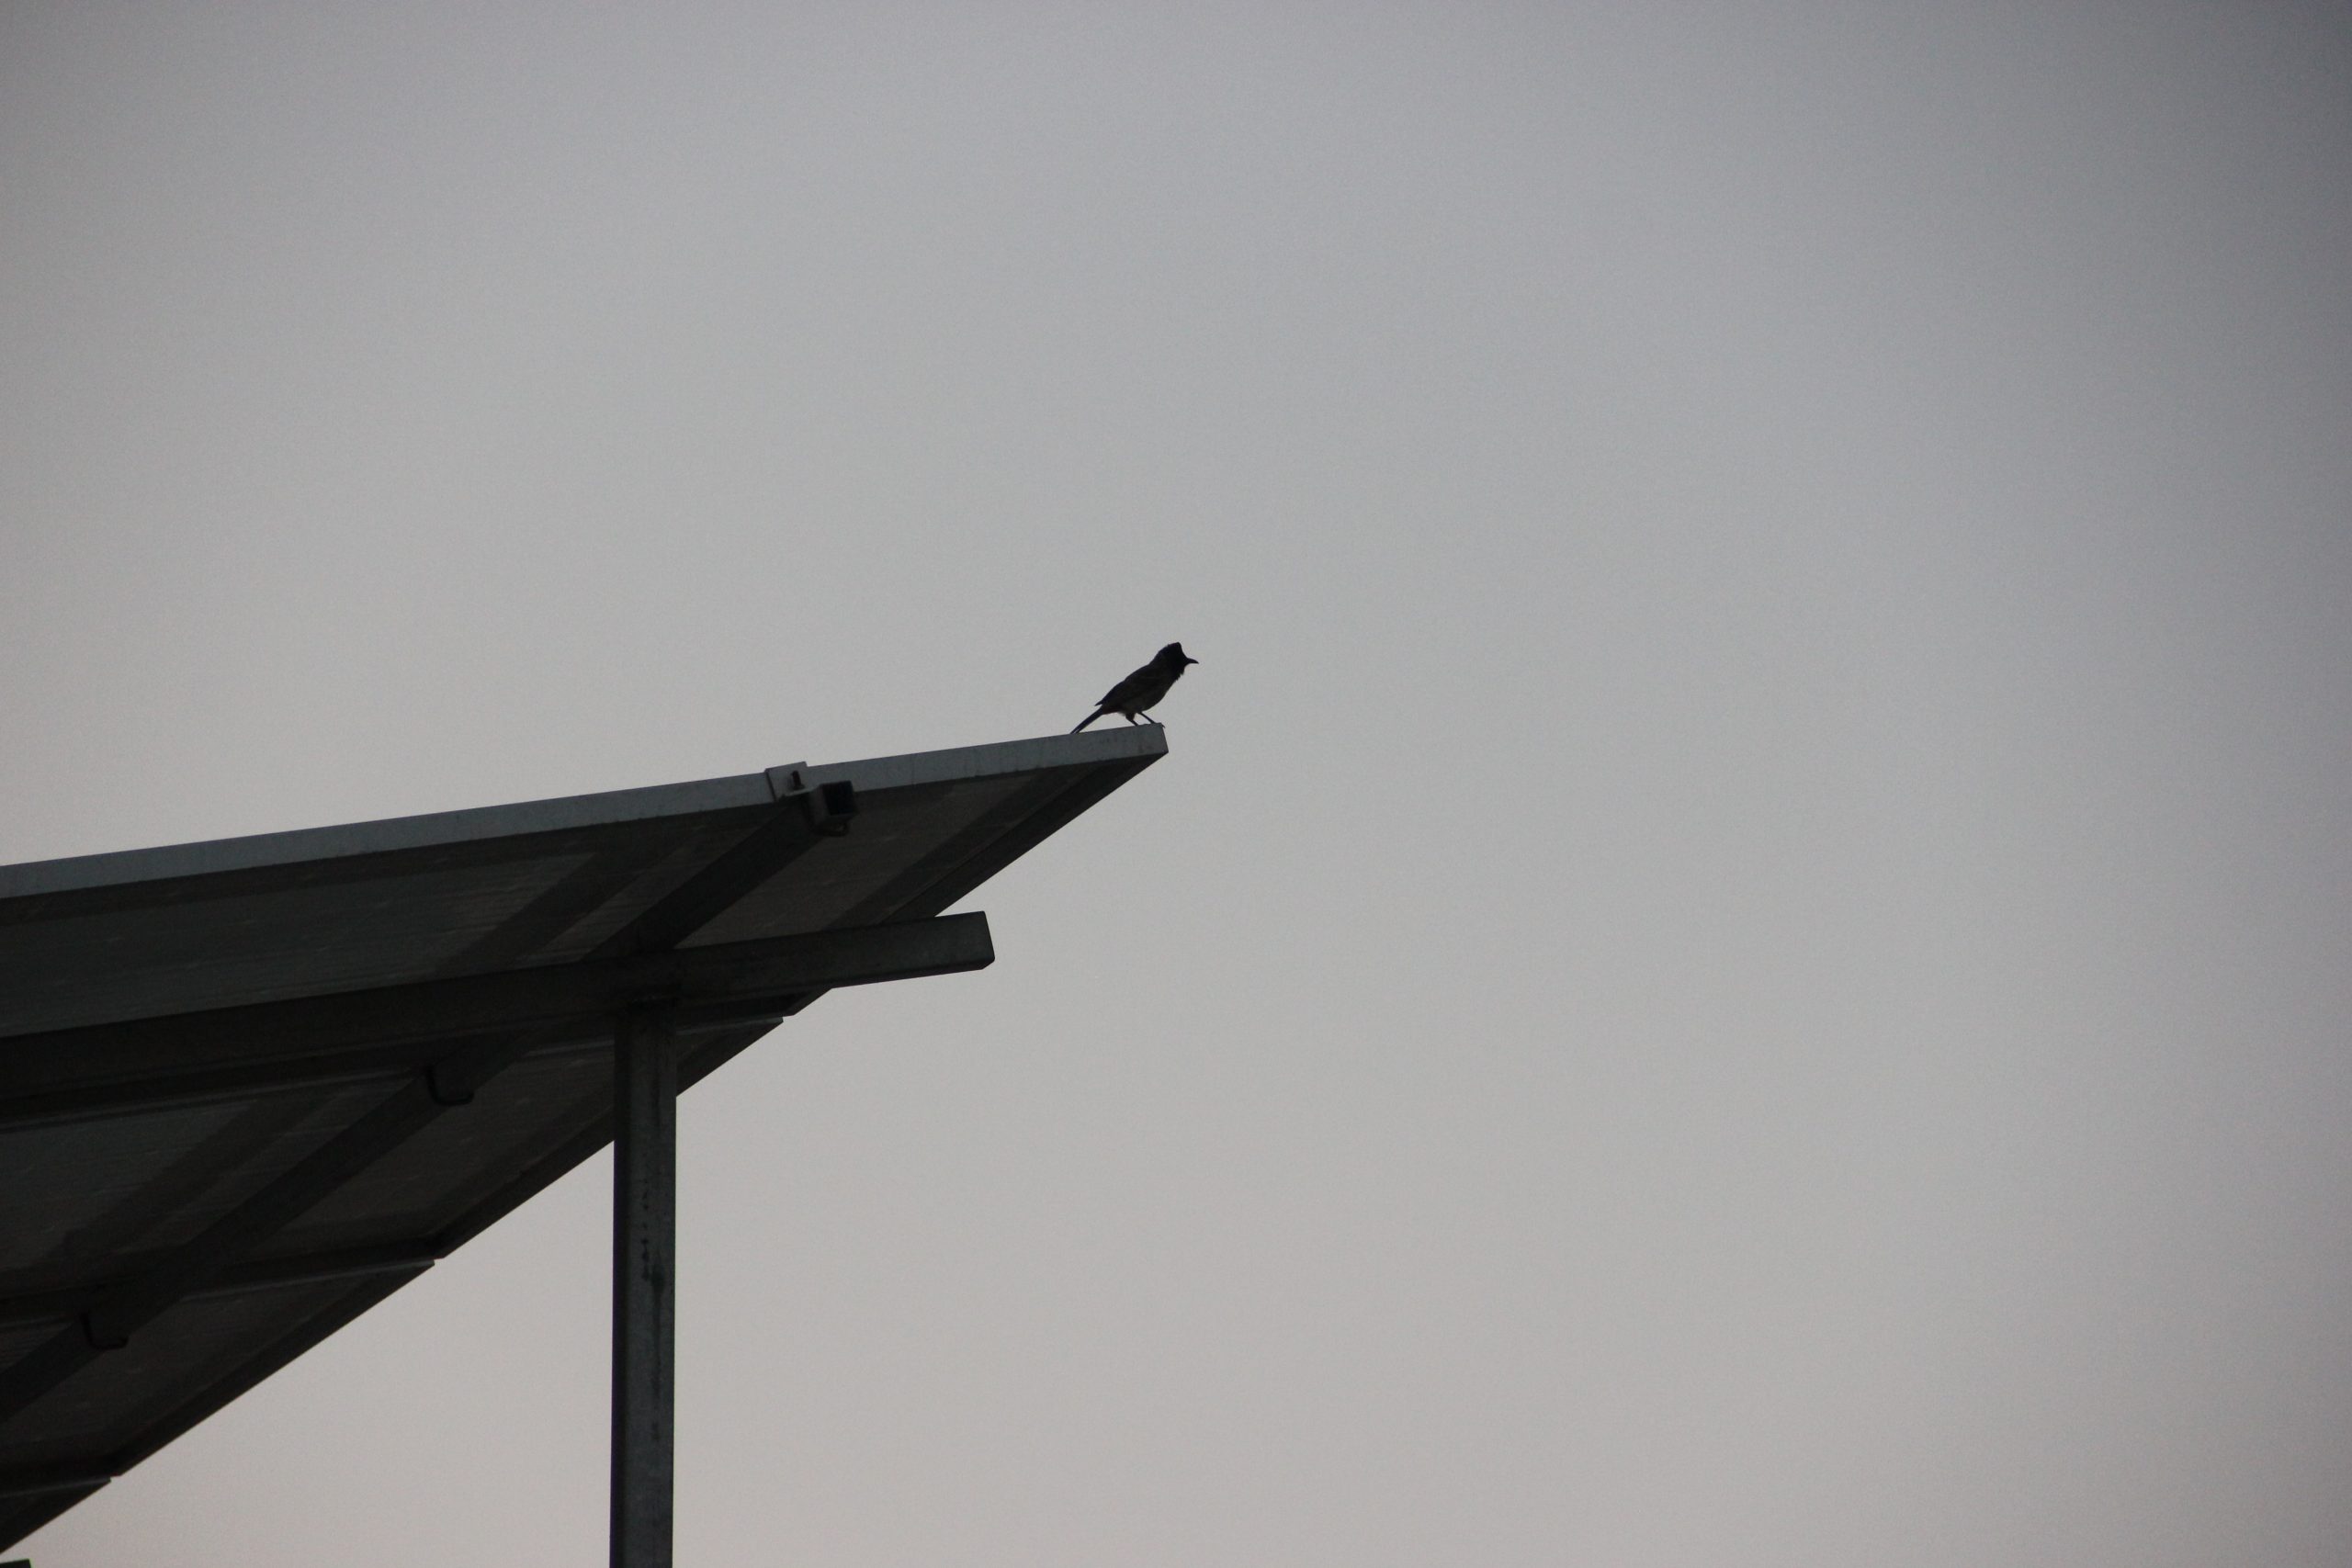 A bird on a roof